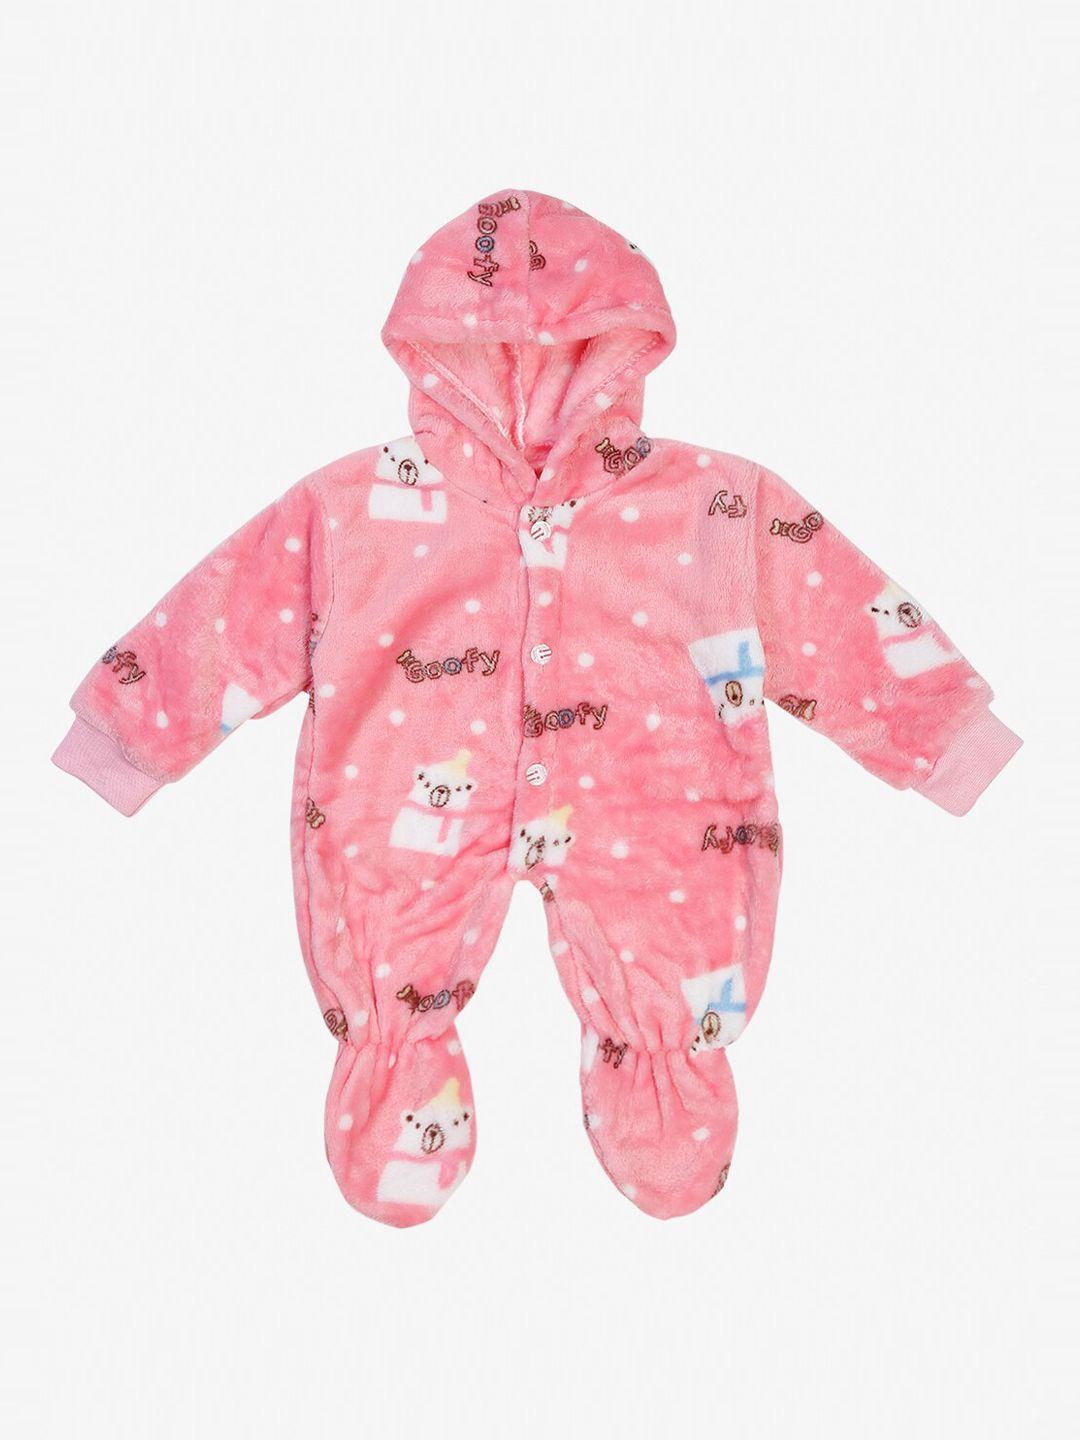 KLOTTHE Kids Infants Pink Printed Woolen Romper